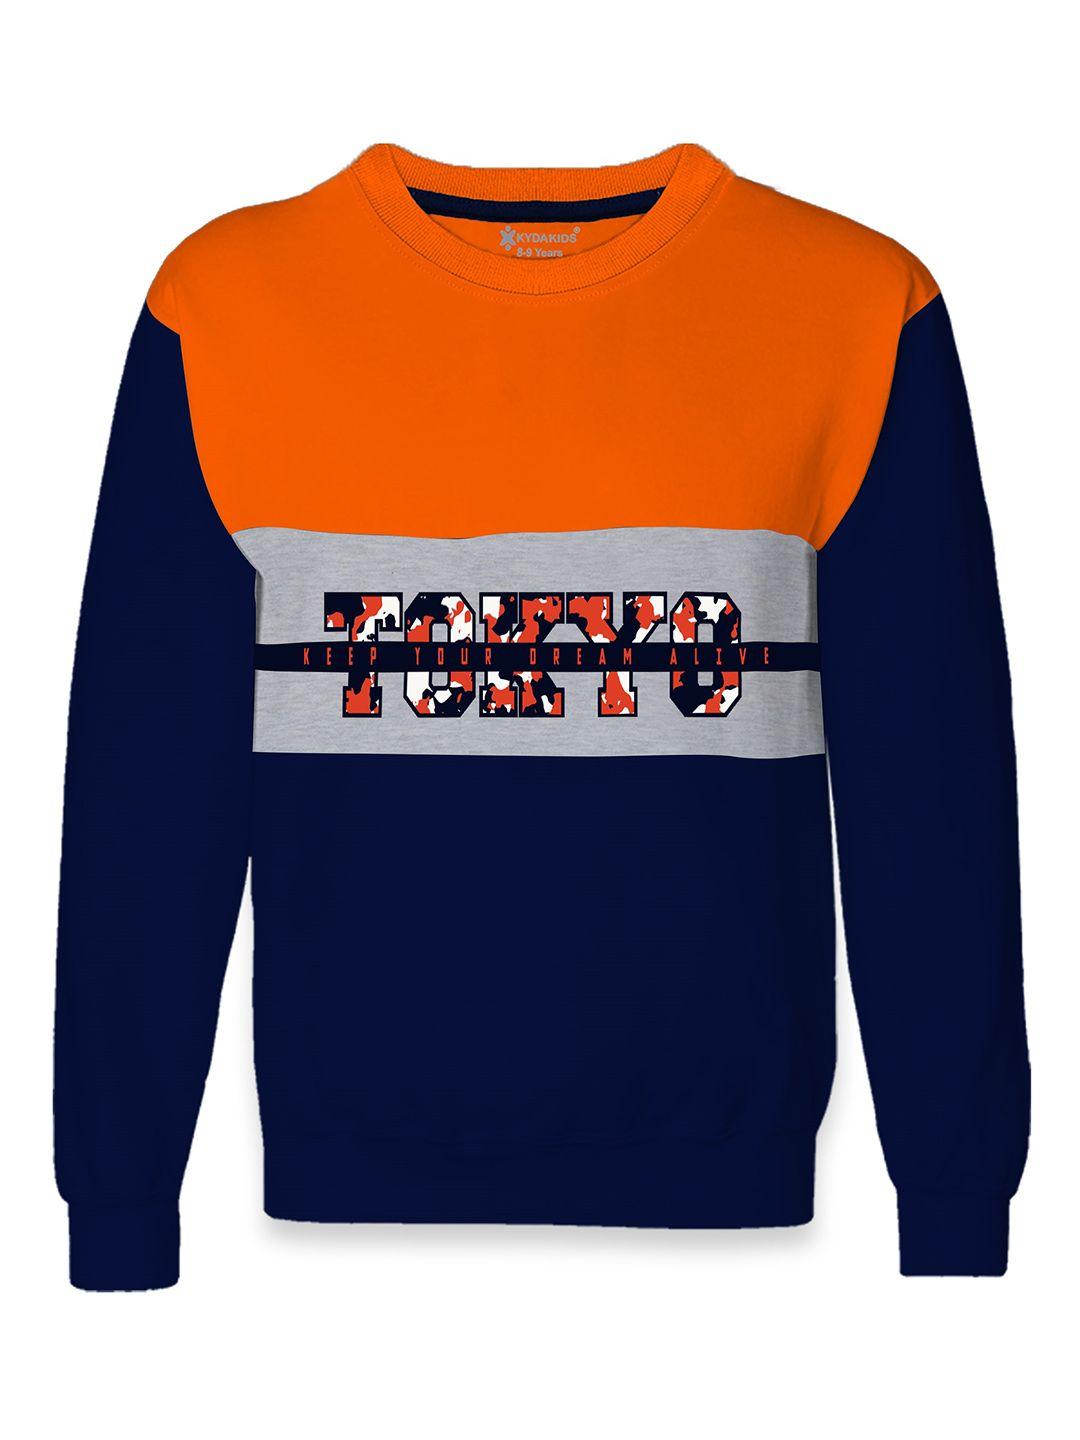 kyda kids boys orange & navy blue colourblocked cotton sweatshirt